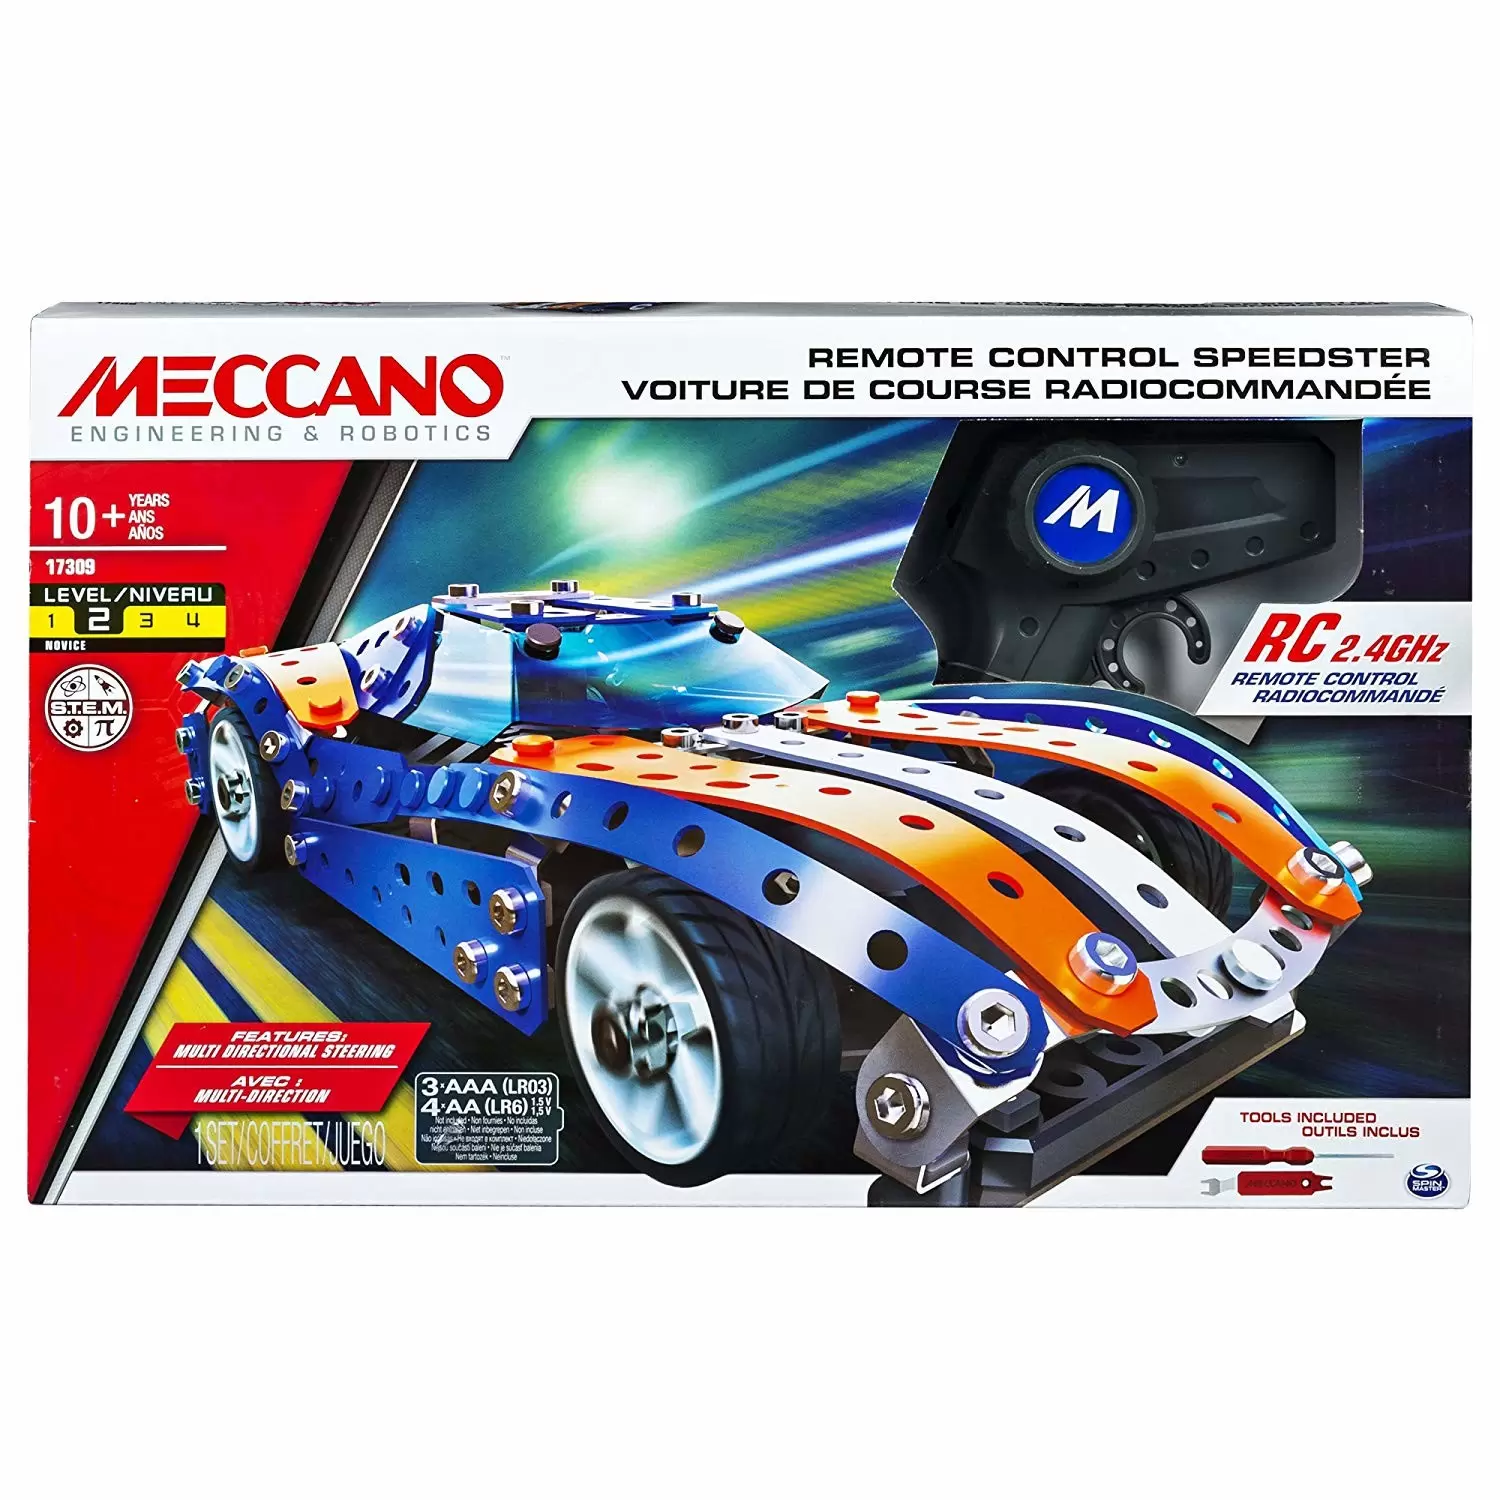 Meccano - Voiture de course radiocommandée